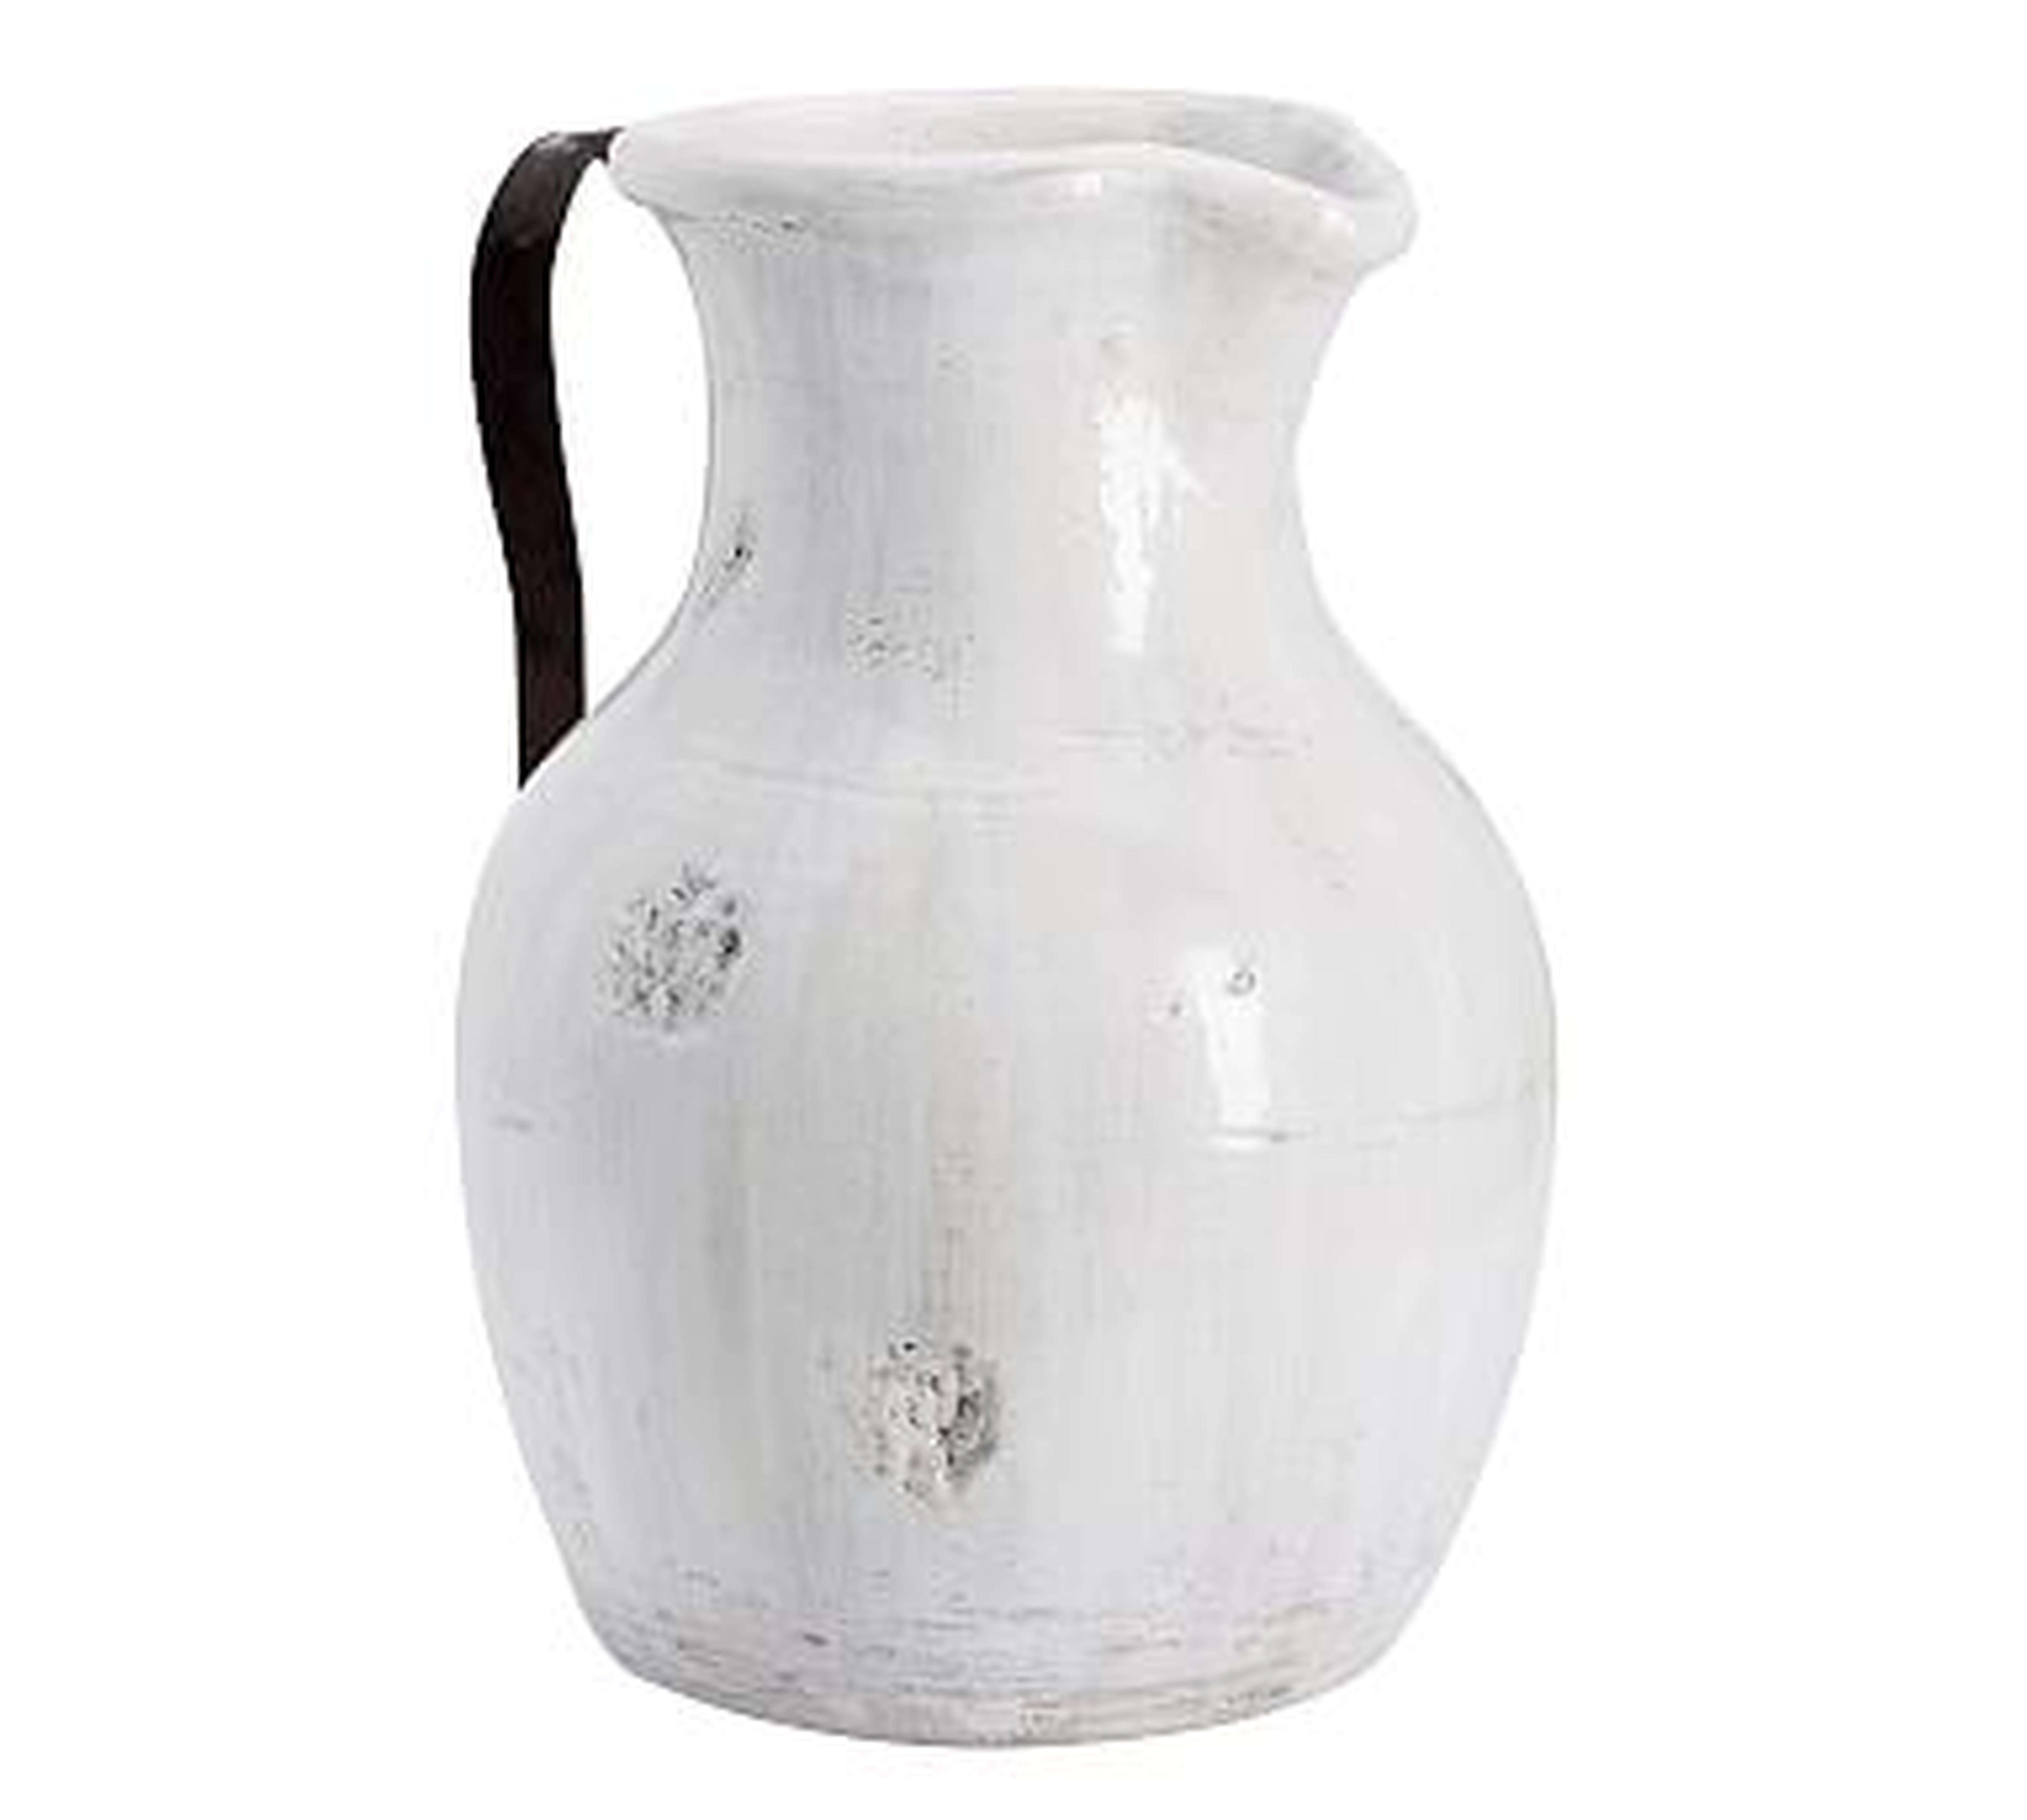 Marlowe Ceramic Pitcher, White, Medium - Pottery Barn